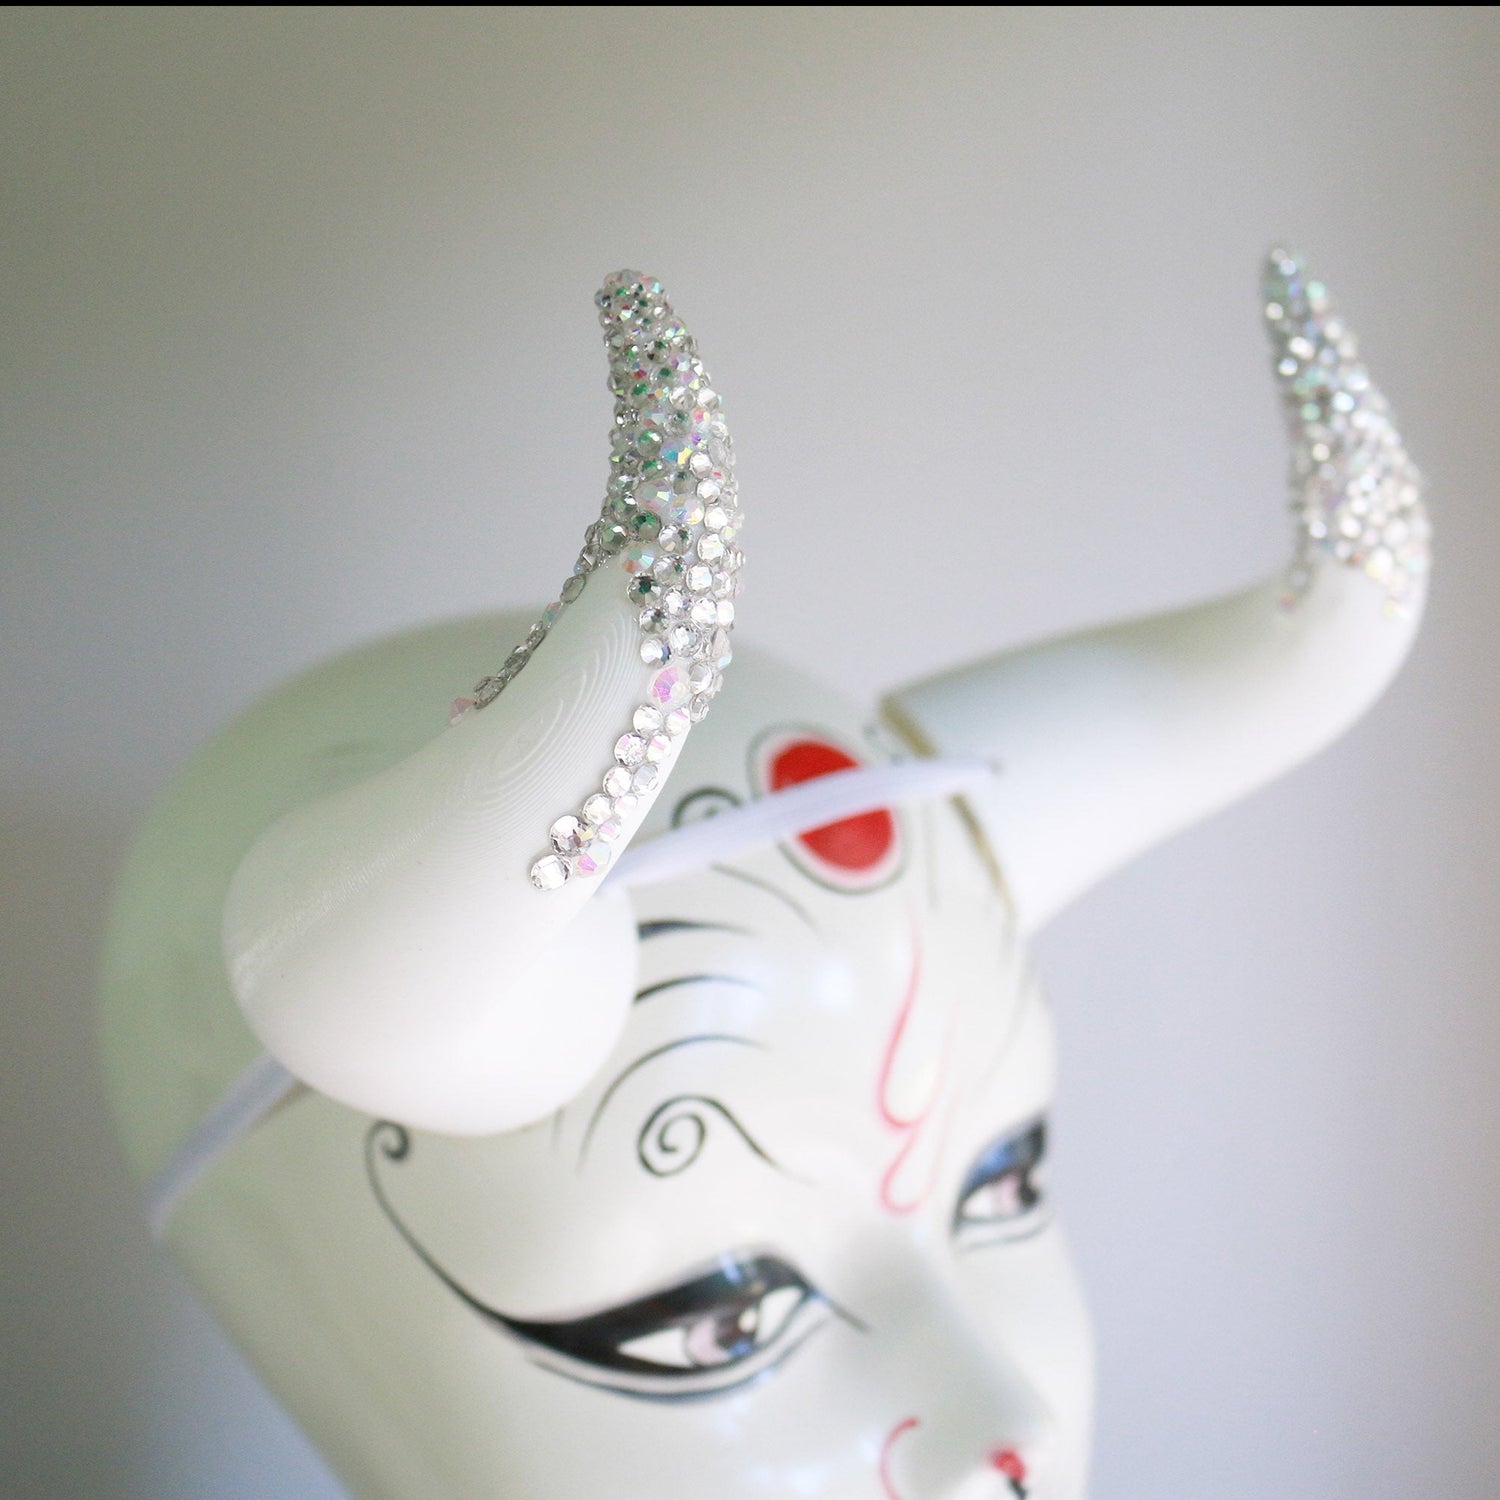 3D Printed Horns